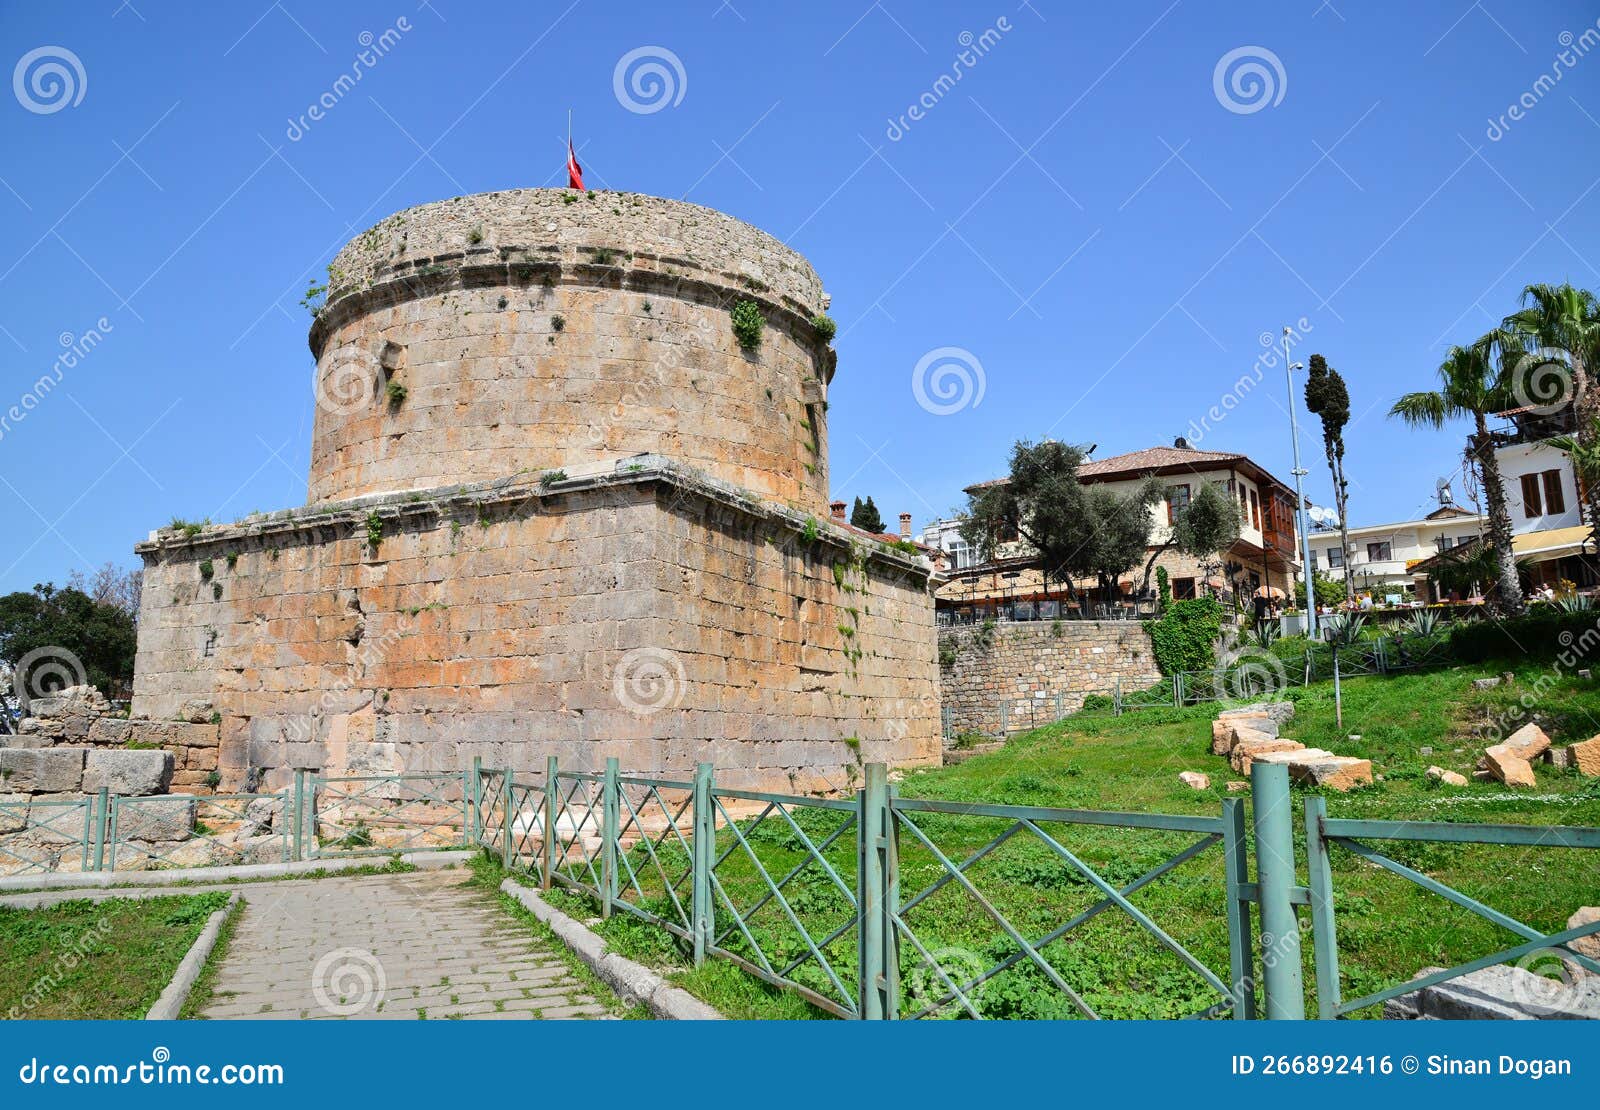 historical hidirlik tower - antalya